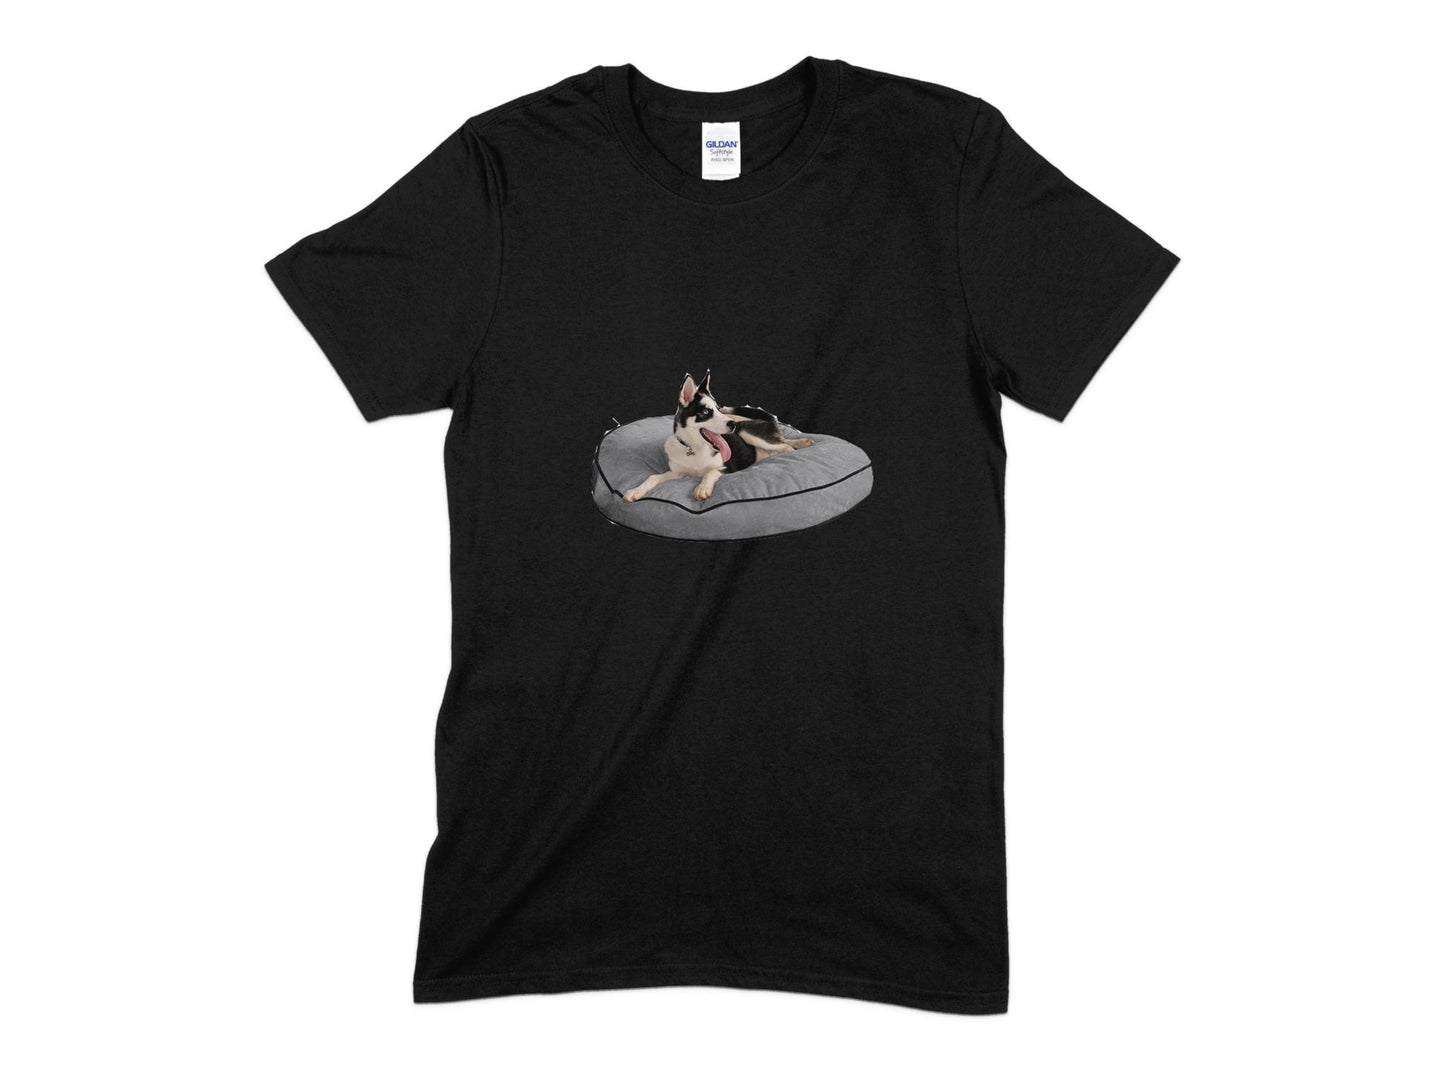 Dog On Bed T-Shirt, Cute Dog Shirt